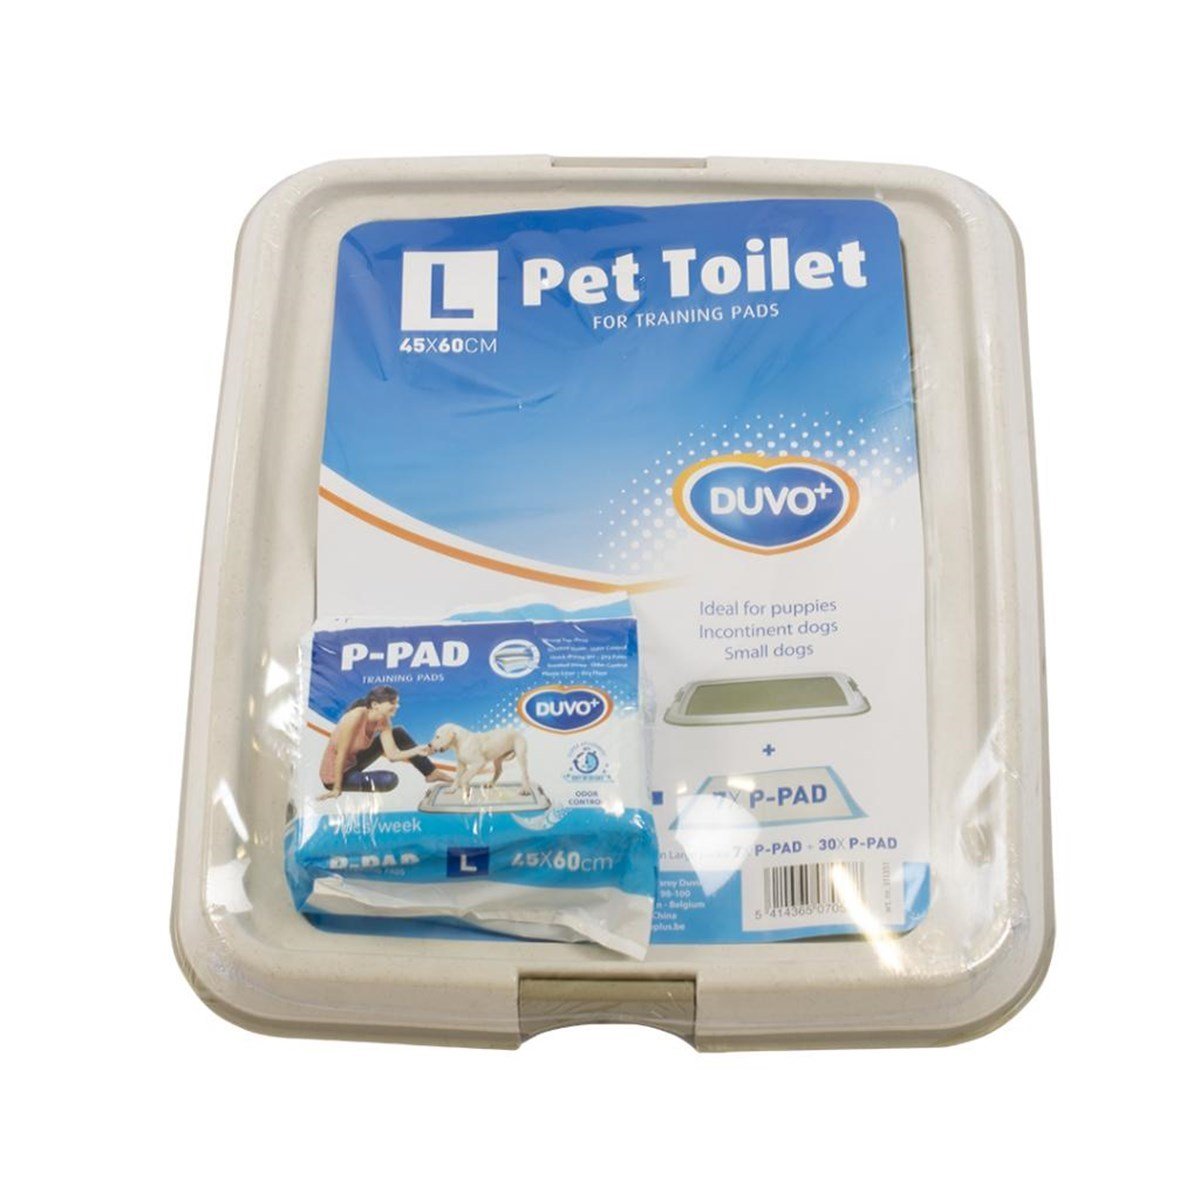 Duvo+ Pet Toilet +7 Pads Köpek Tuvalet ve Pedi 45x60cm